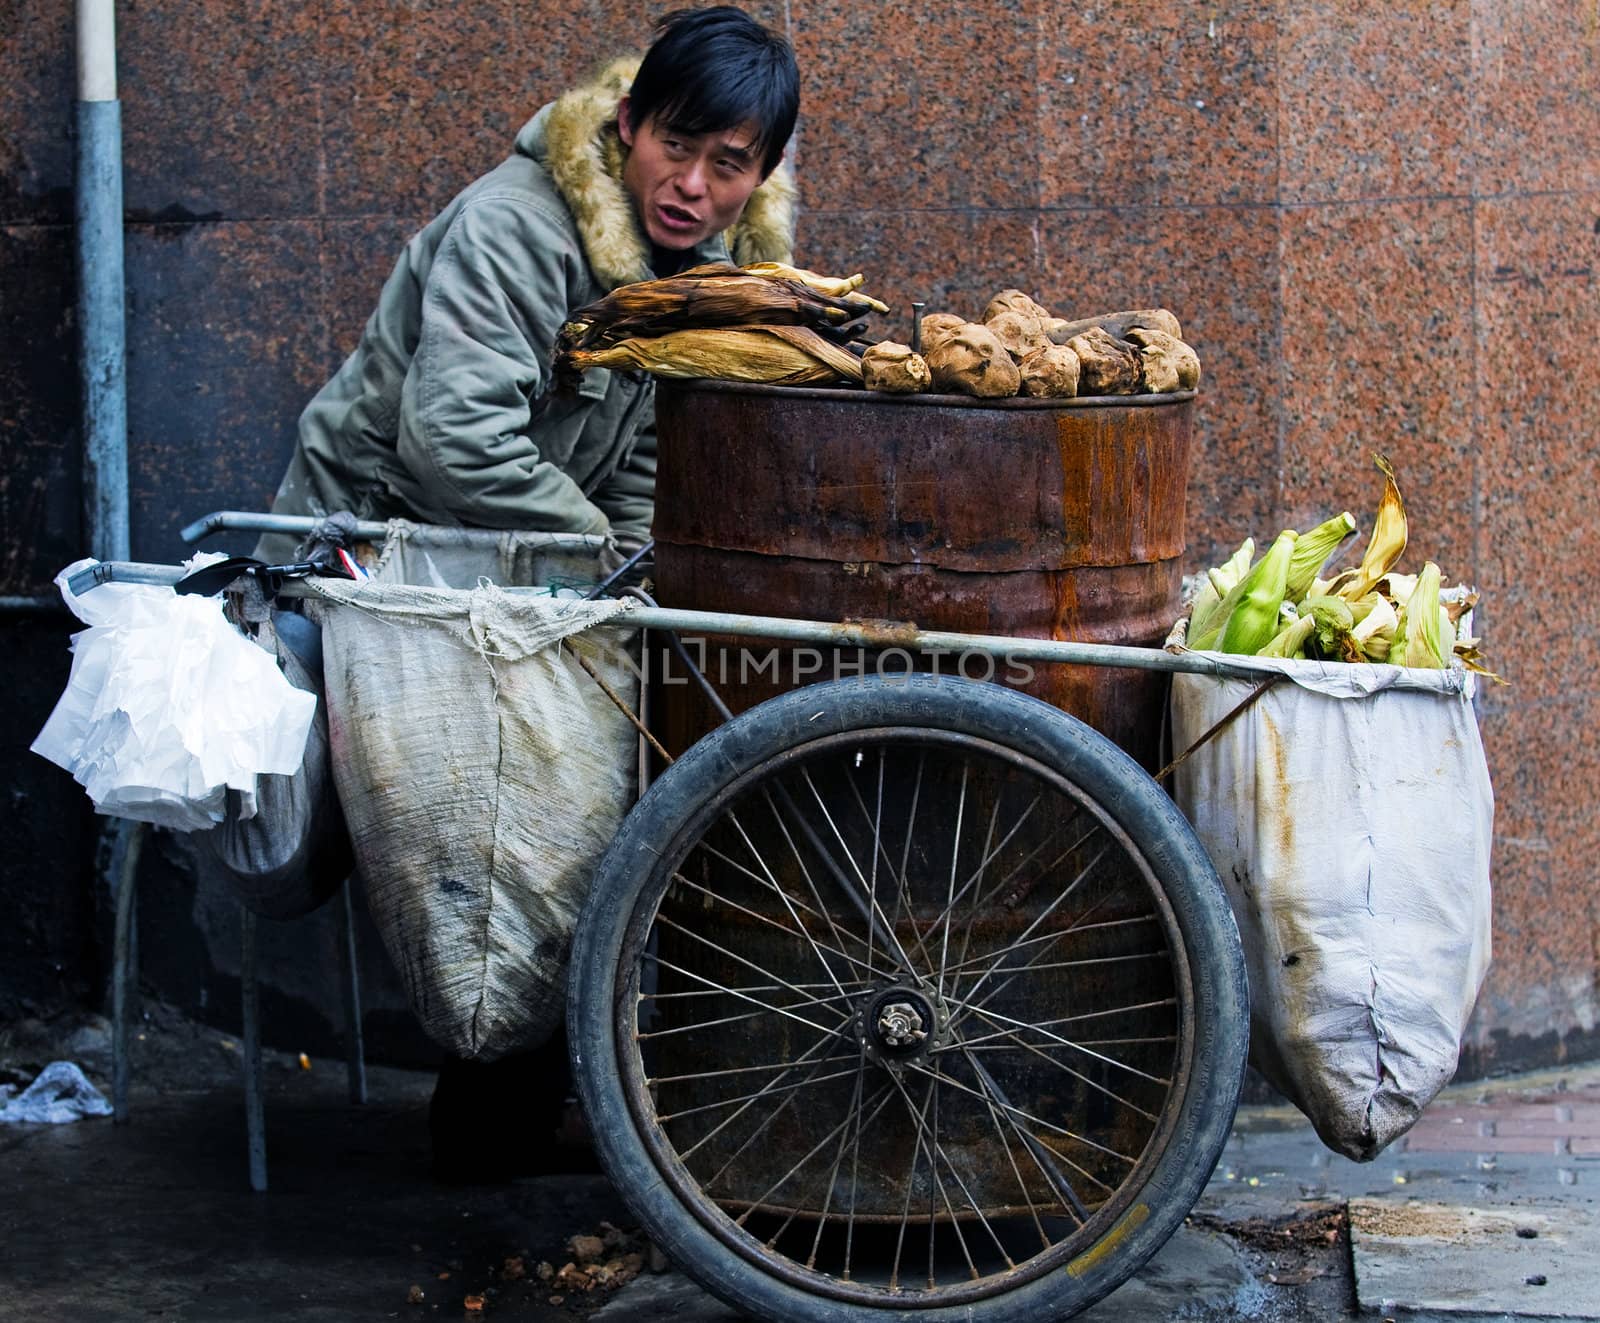  Chinese food seller by kobby_dagan